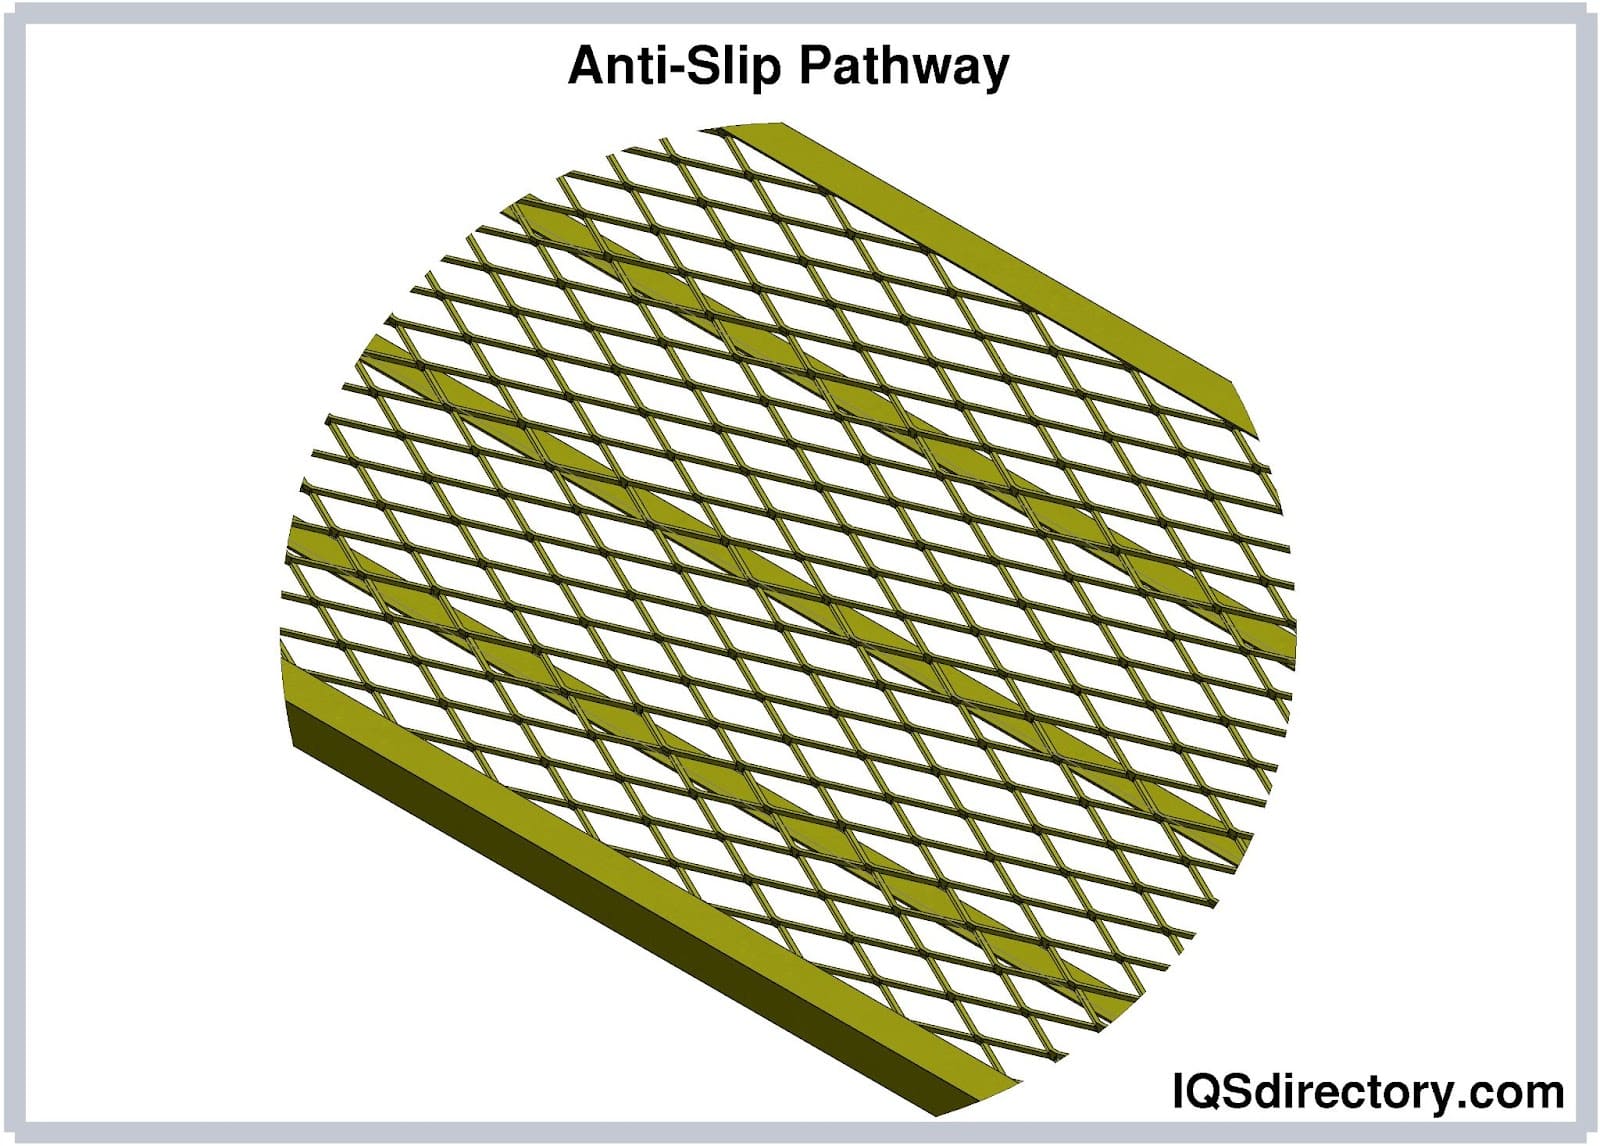 Anti-Slip Pathway